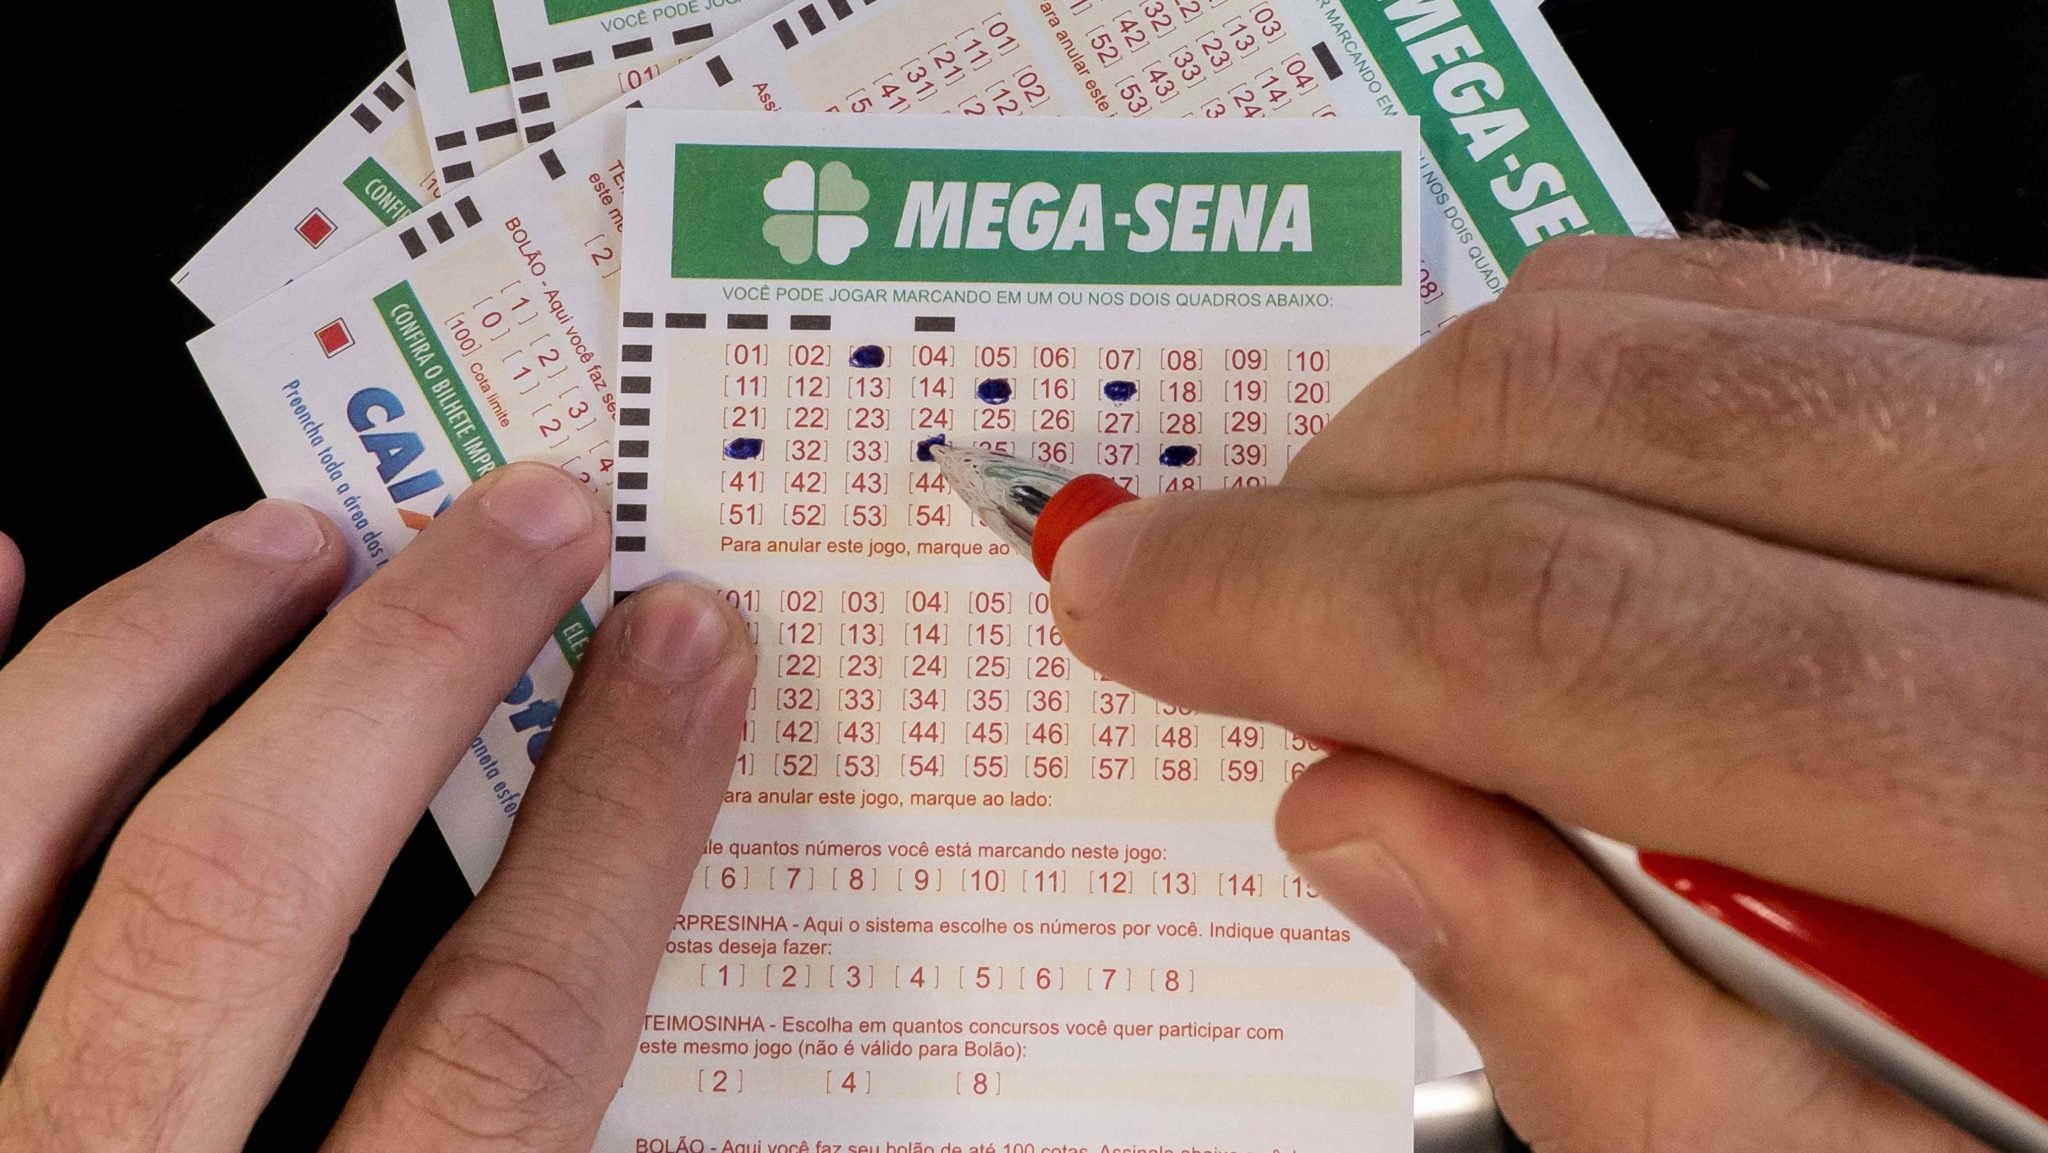 Brazil’s Gambling Market Is Adding New Lottery, Sports Betting Options